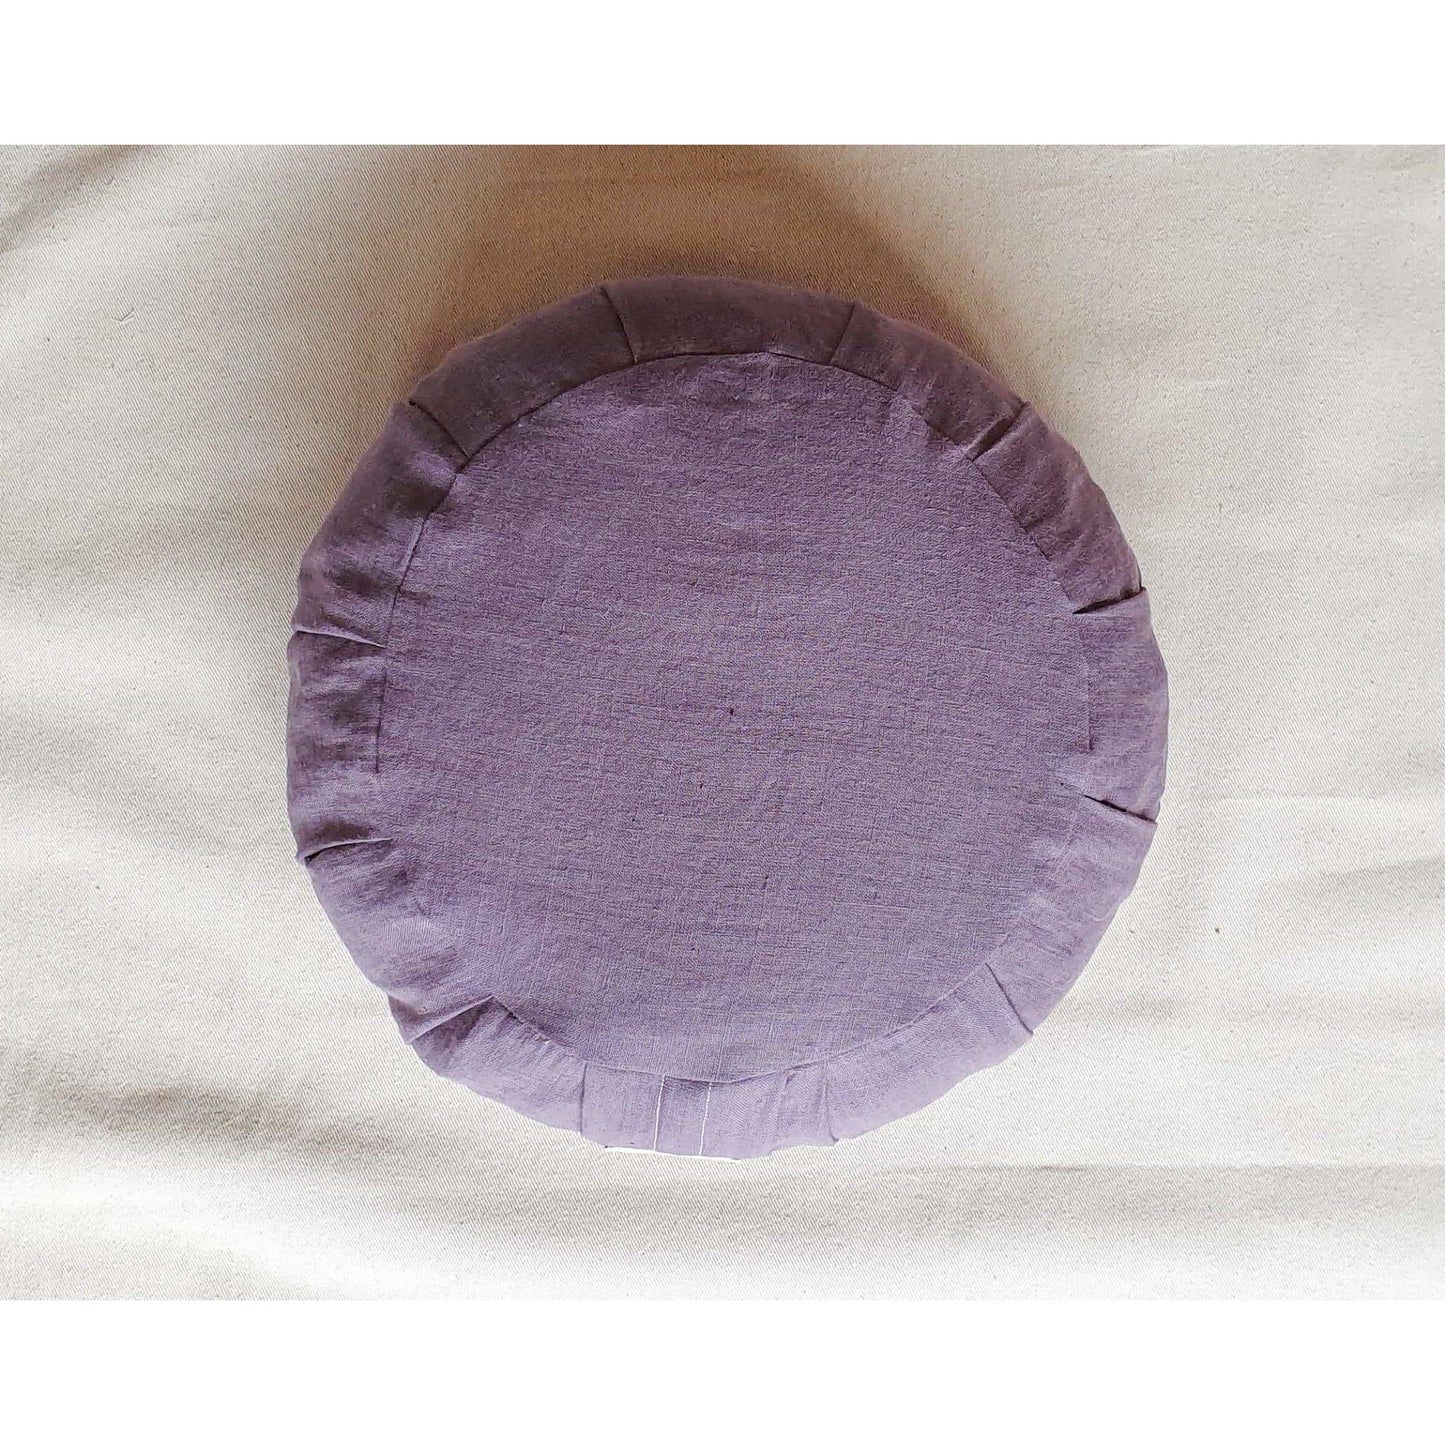 Organic Linen and Buckwheat Meditation Cushion - Sustainable Meditation and Yoga Products